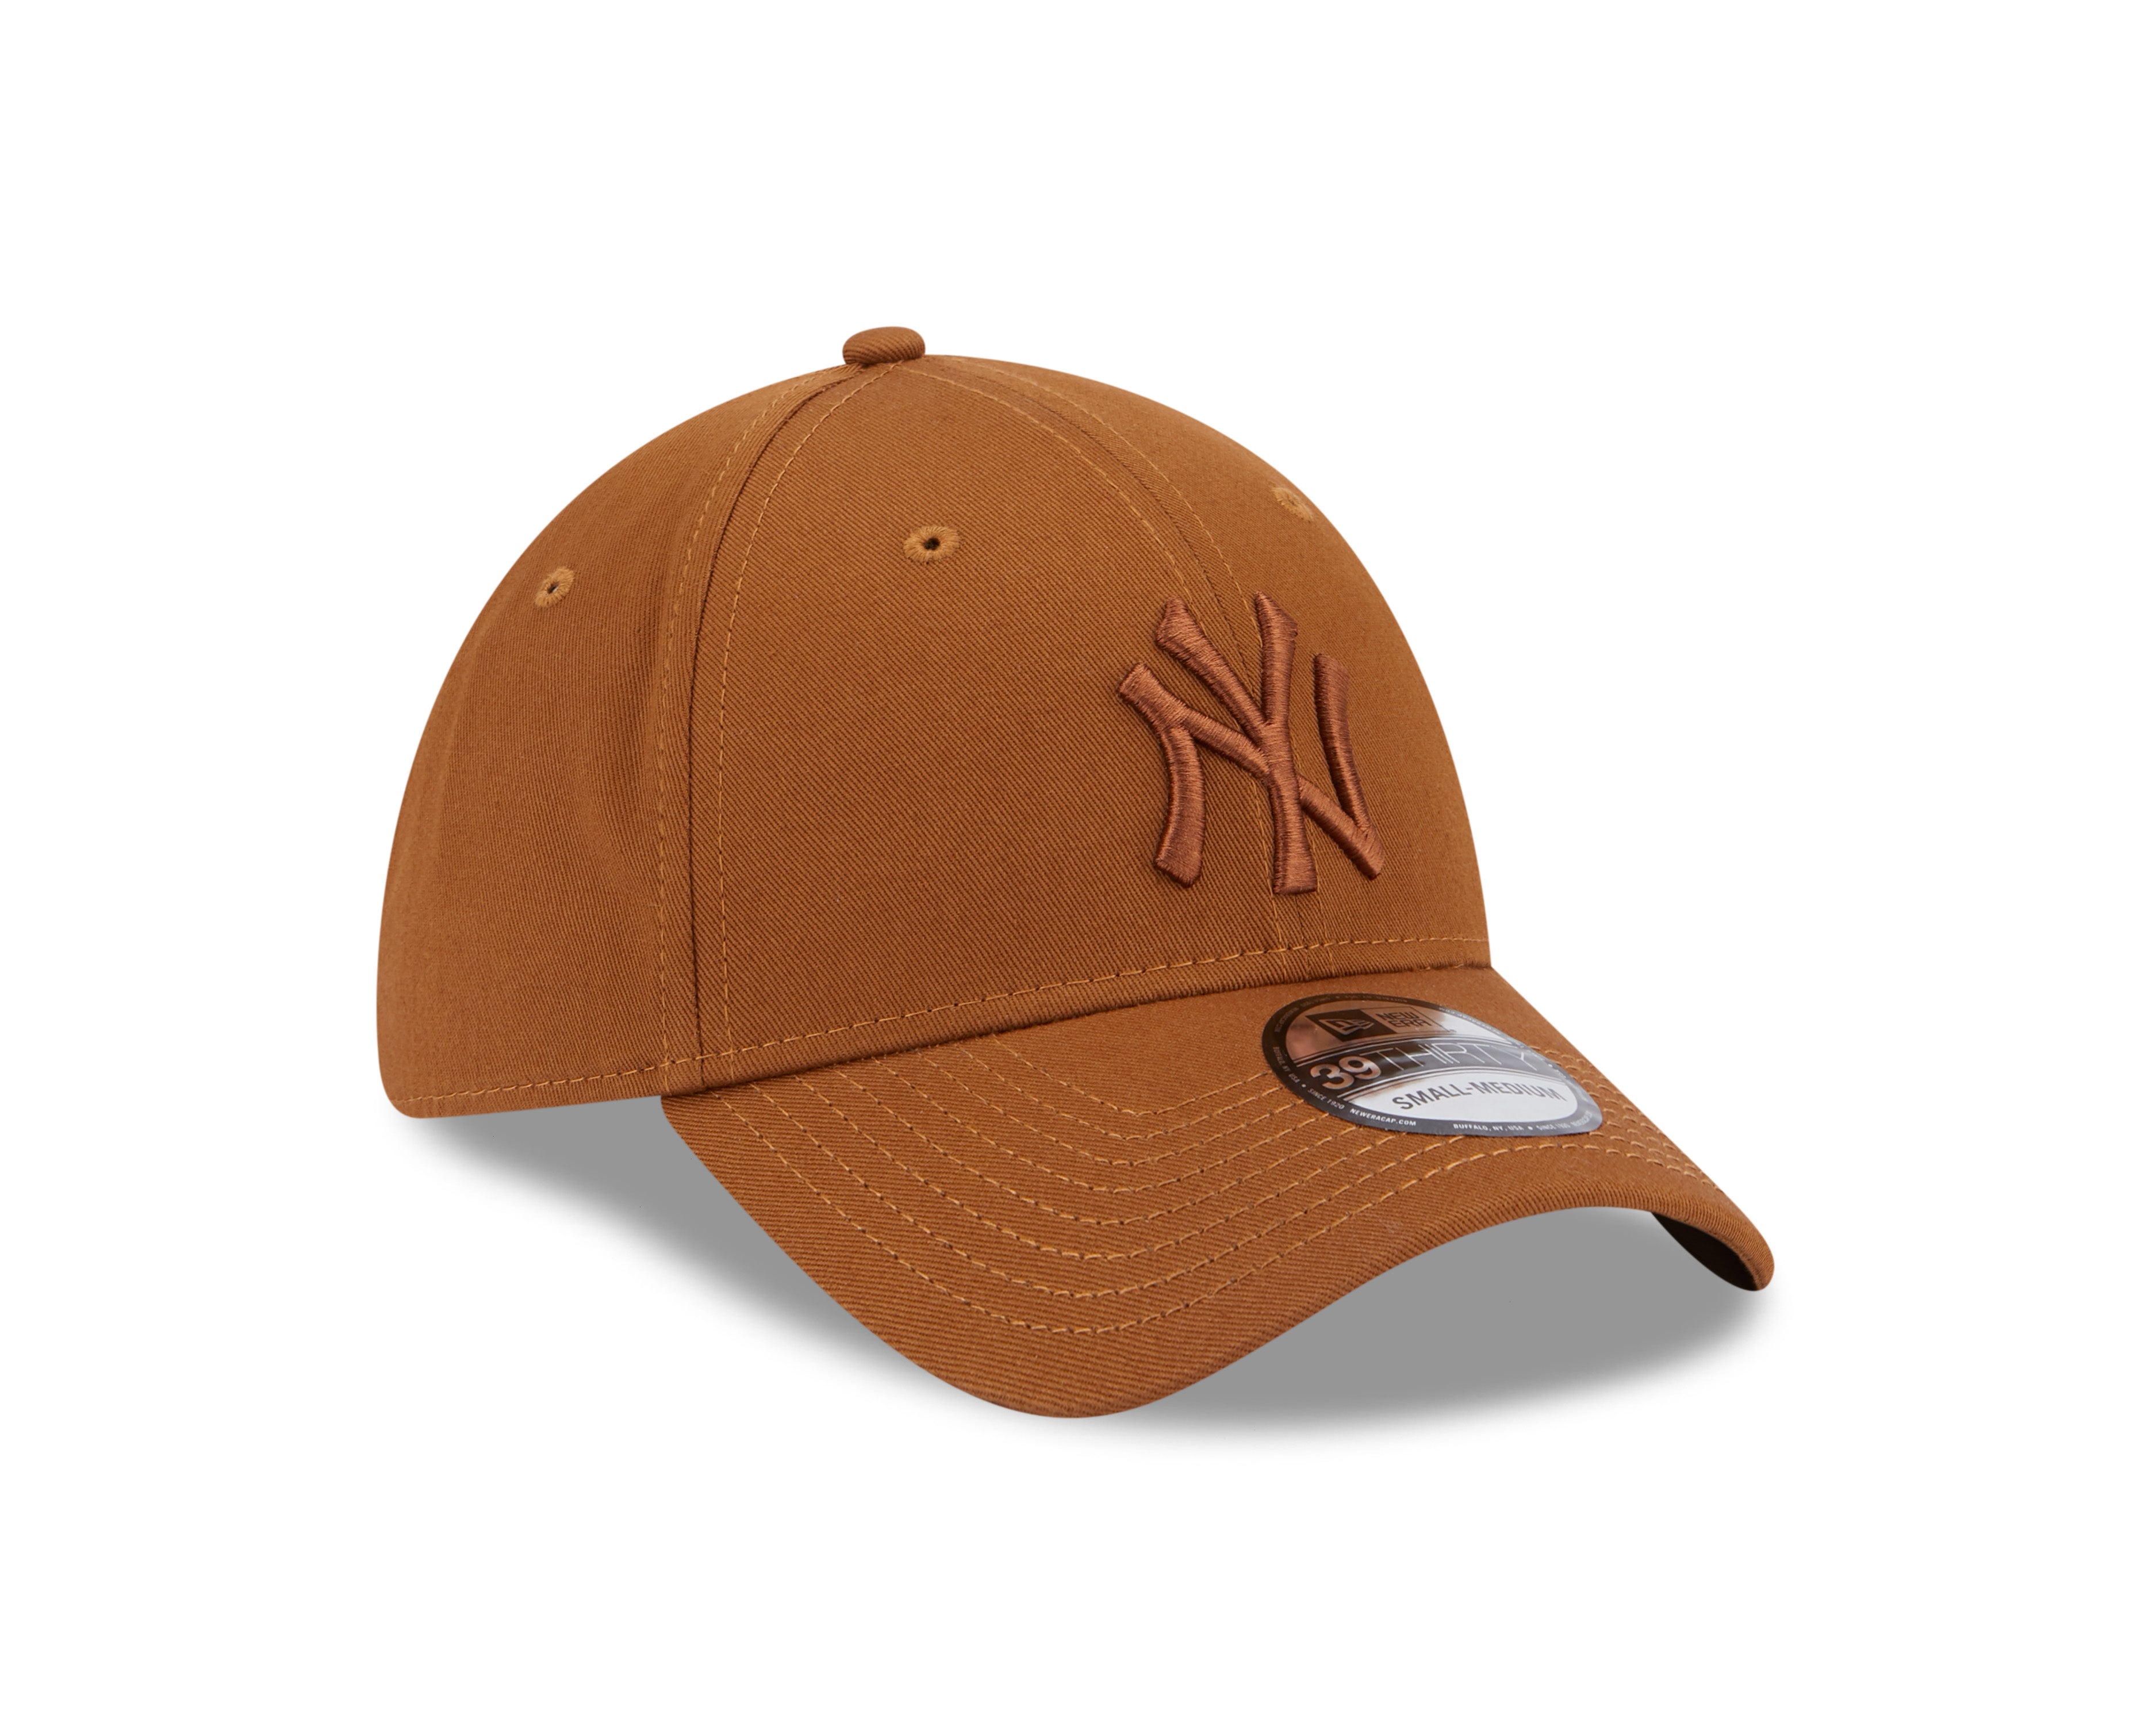 New Era New York Yankees League Essential 39Thirty - Light Brown Tonal - Headz Up 